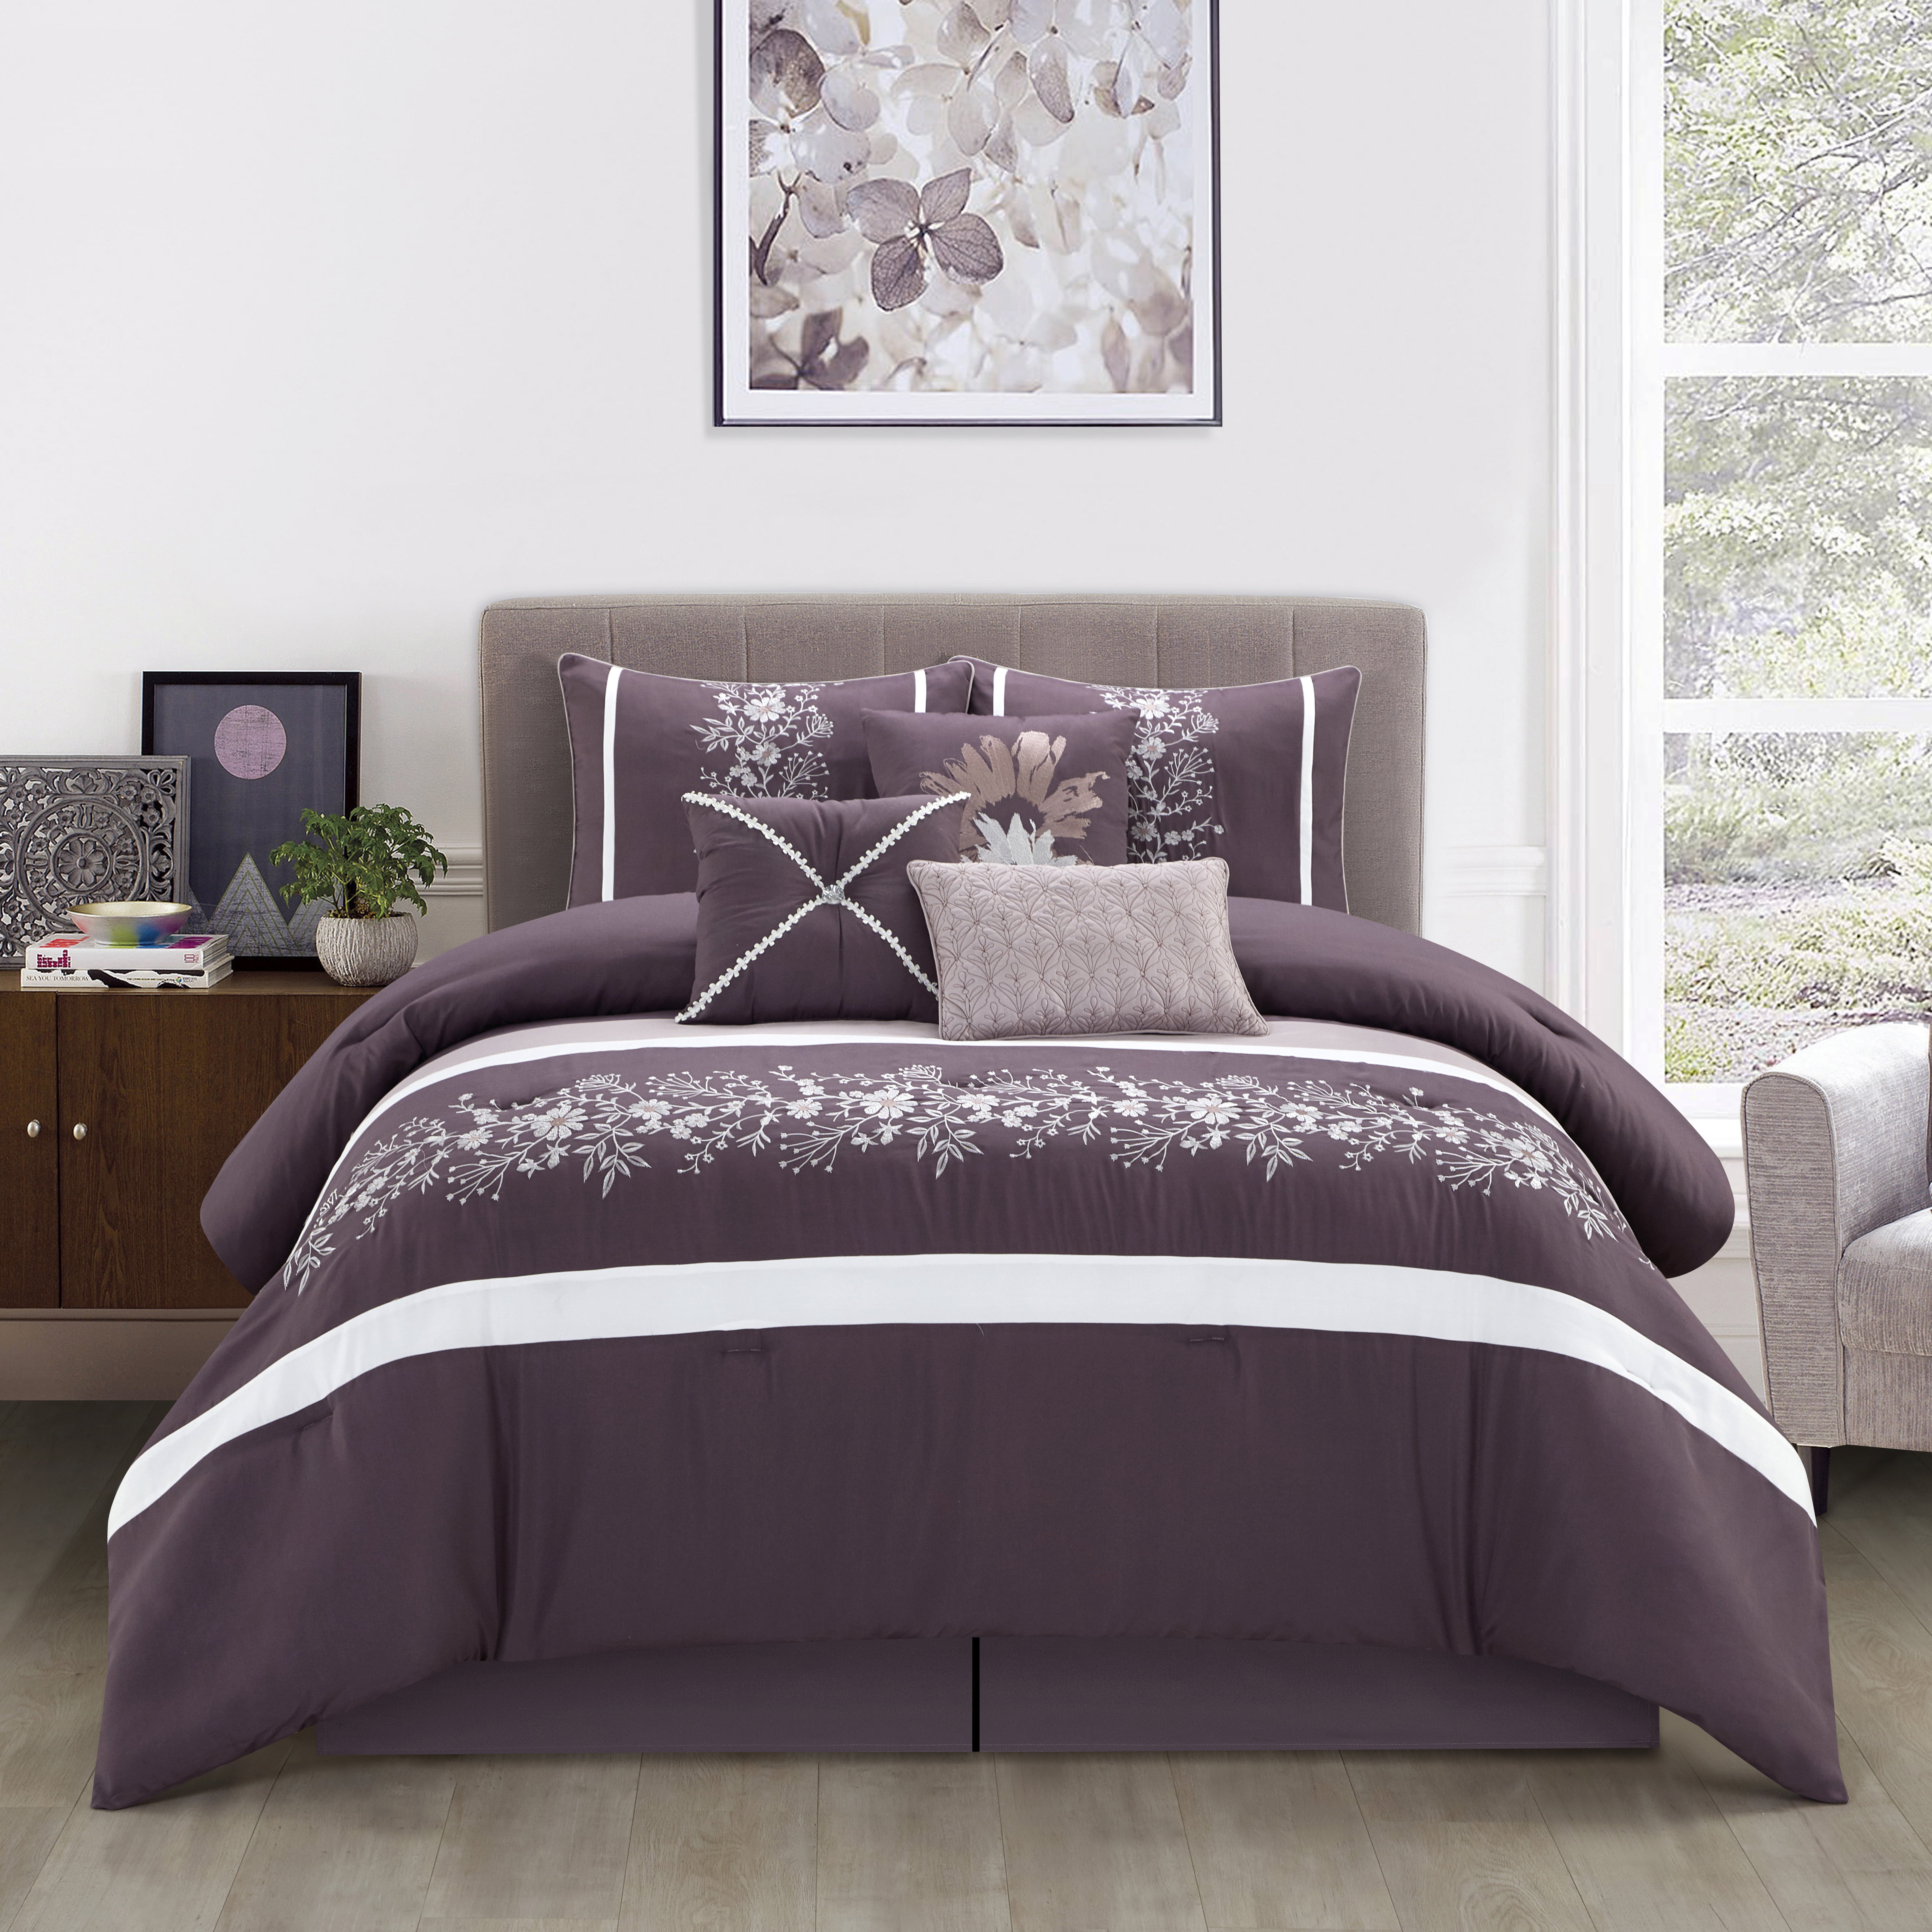 Beautiful Grey Floral Texture Contemporary Comforter 7 pcs King Queen Set 